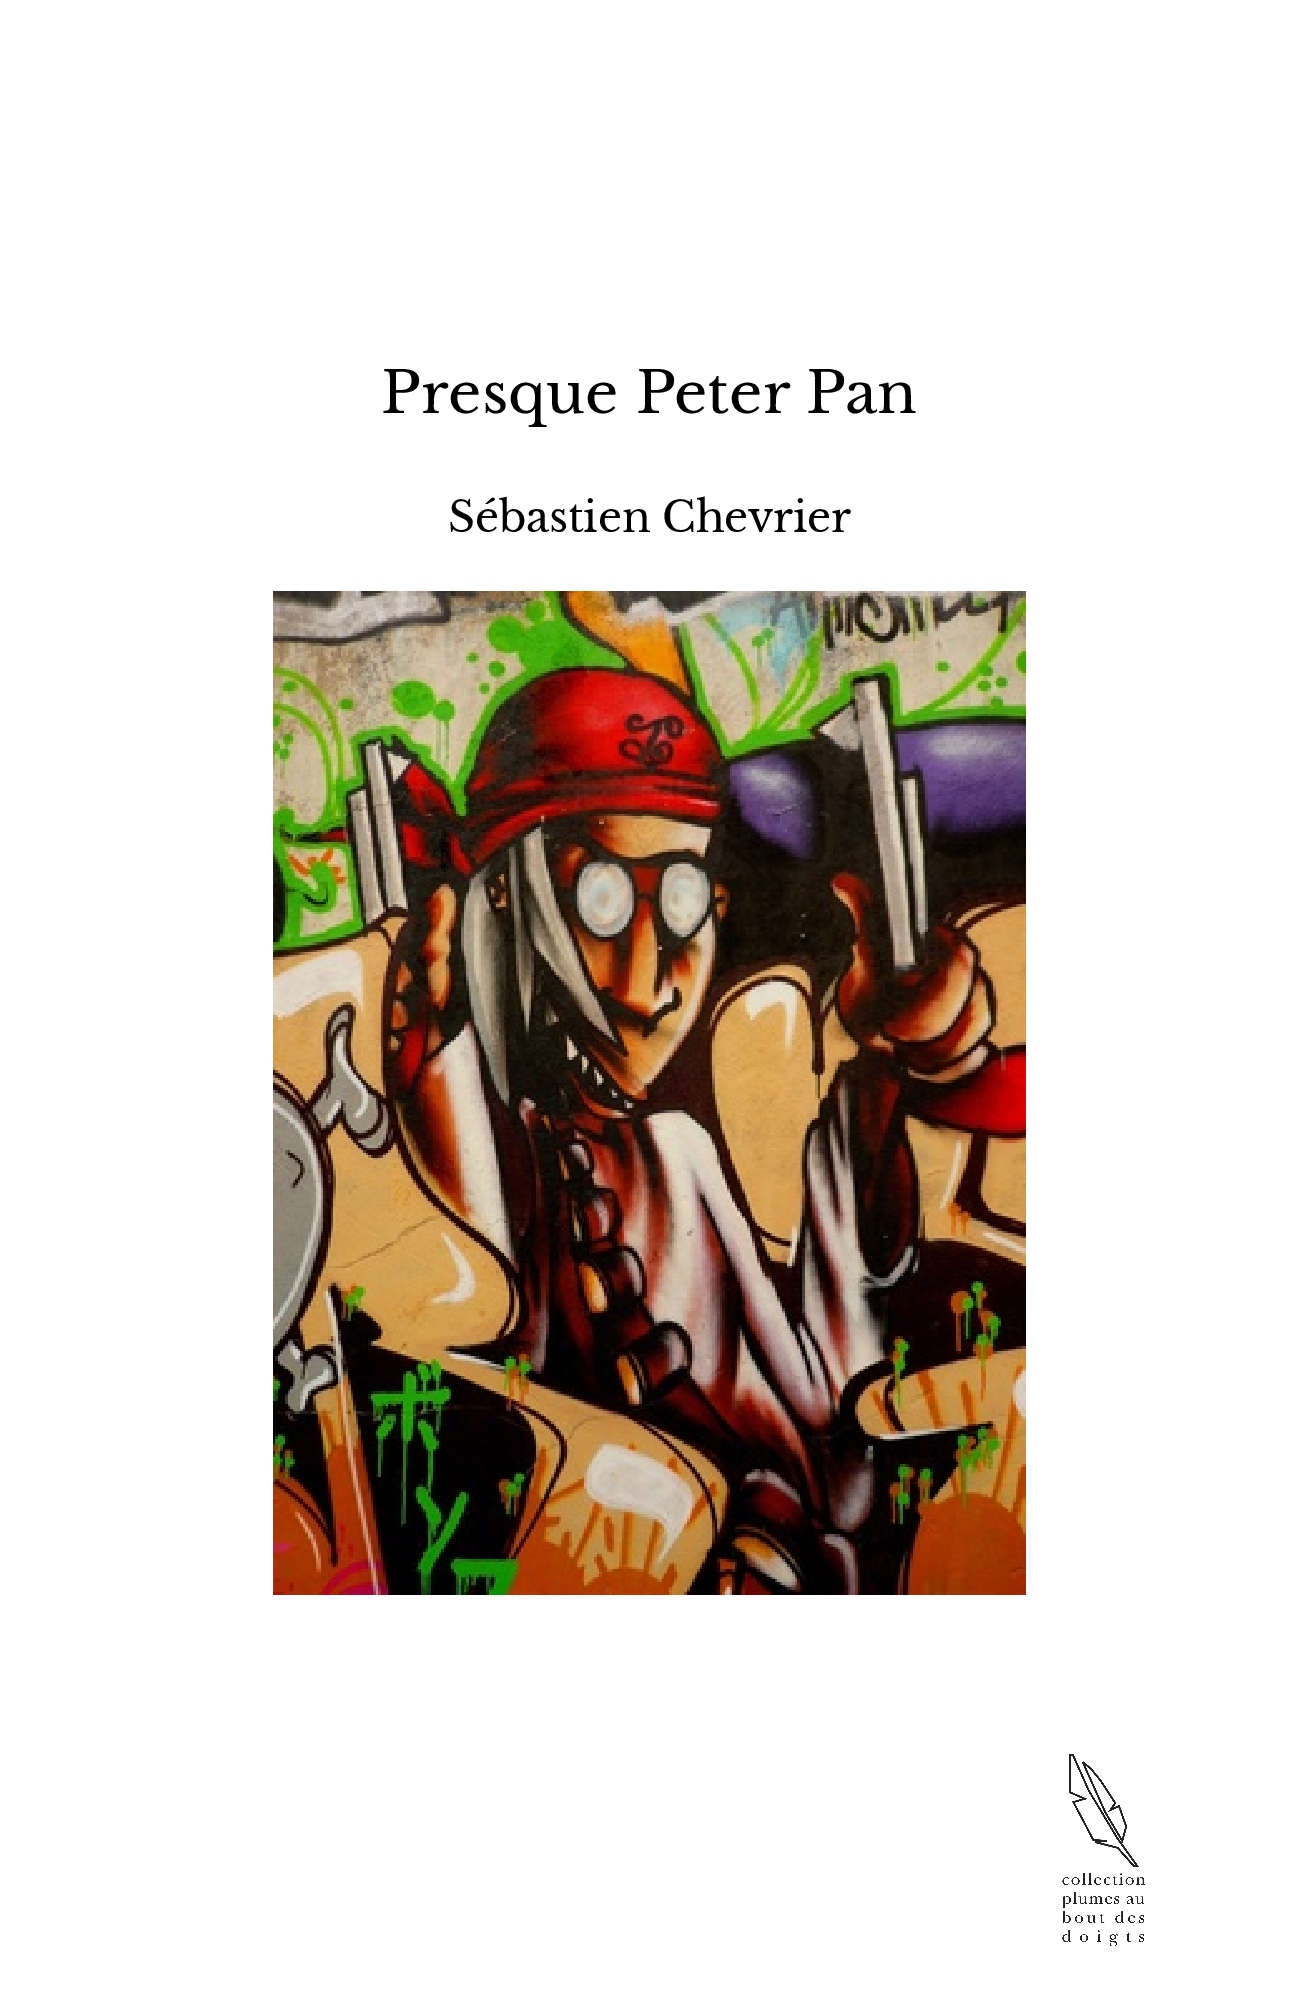 Presque Peter Pan